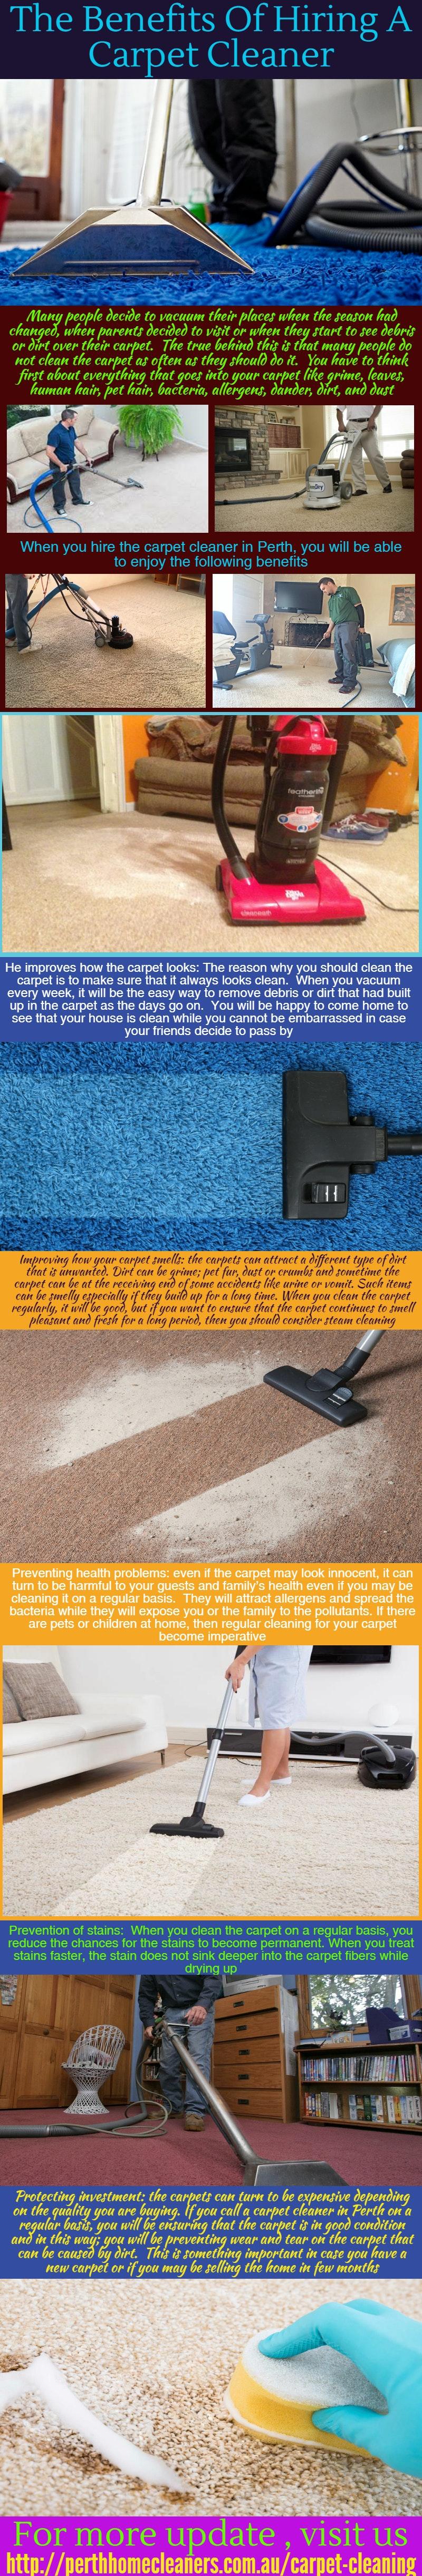 pexels-photo-388772.png?cs=srgb&dl=carpet-cleaning-carpet-cleaning-perth-price-carpet-steam-cleaning-perth-388772.jpg&fm=jpg